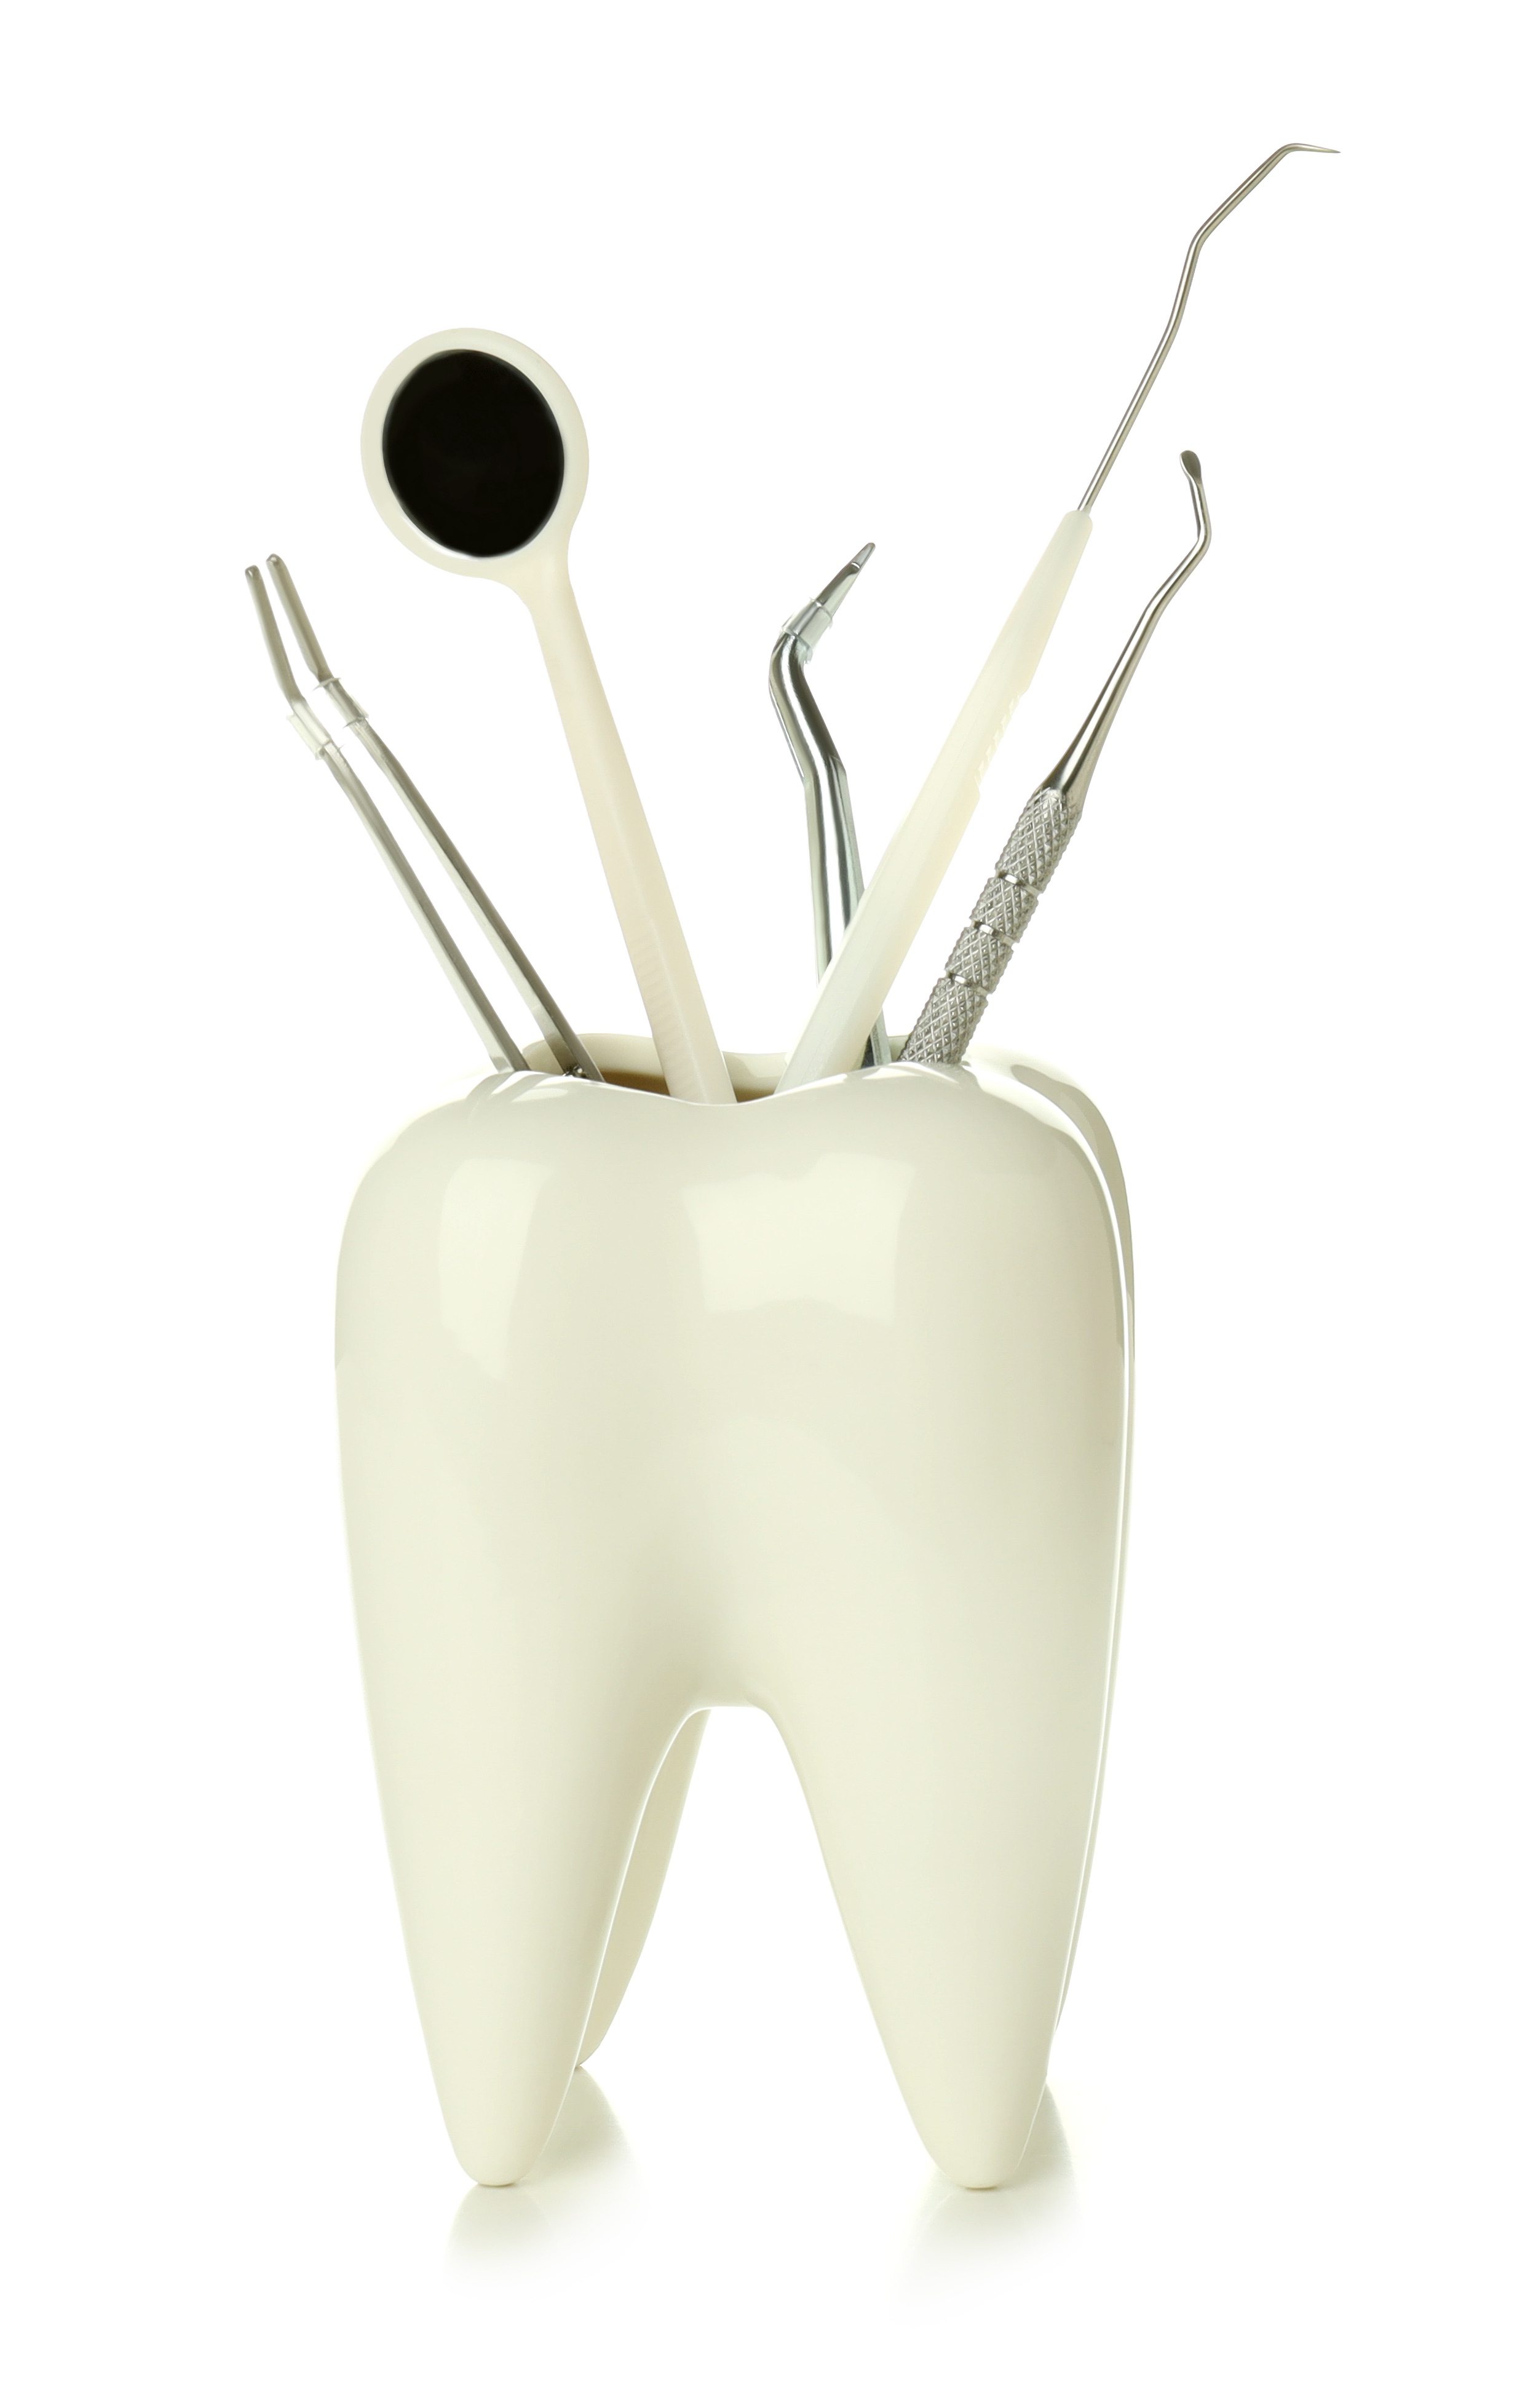 Tooth Dentist